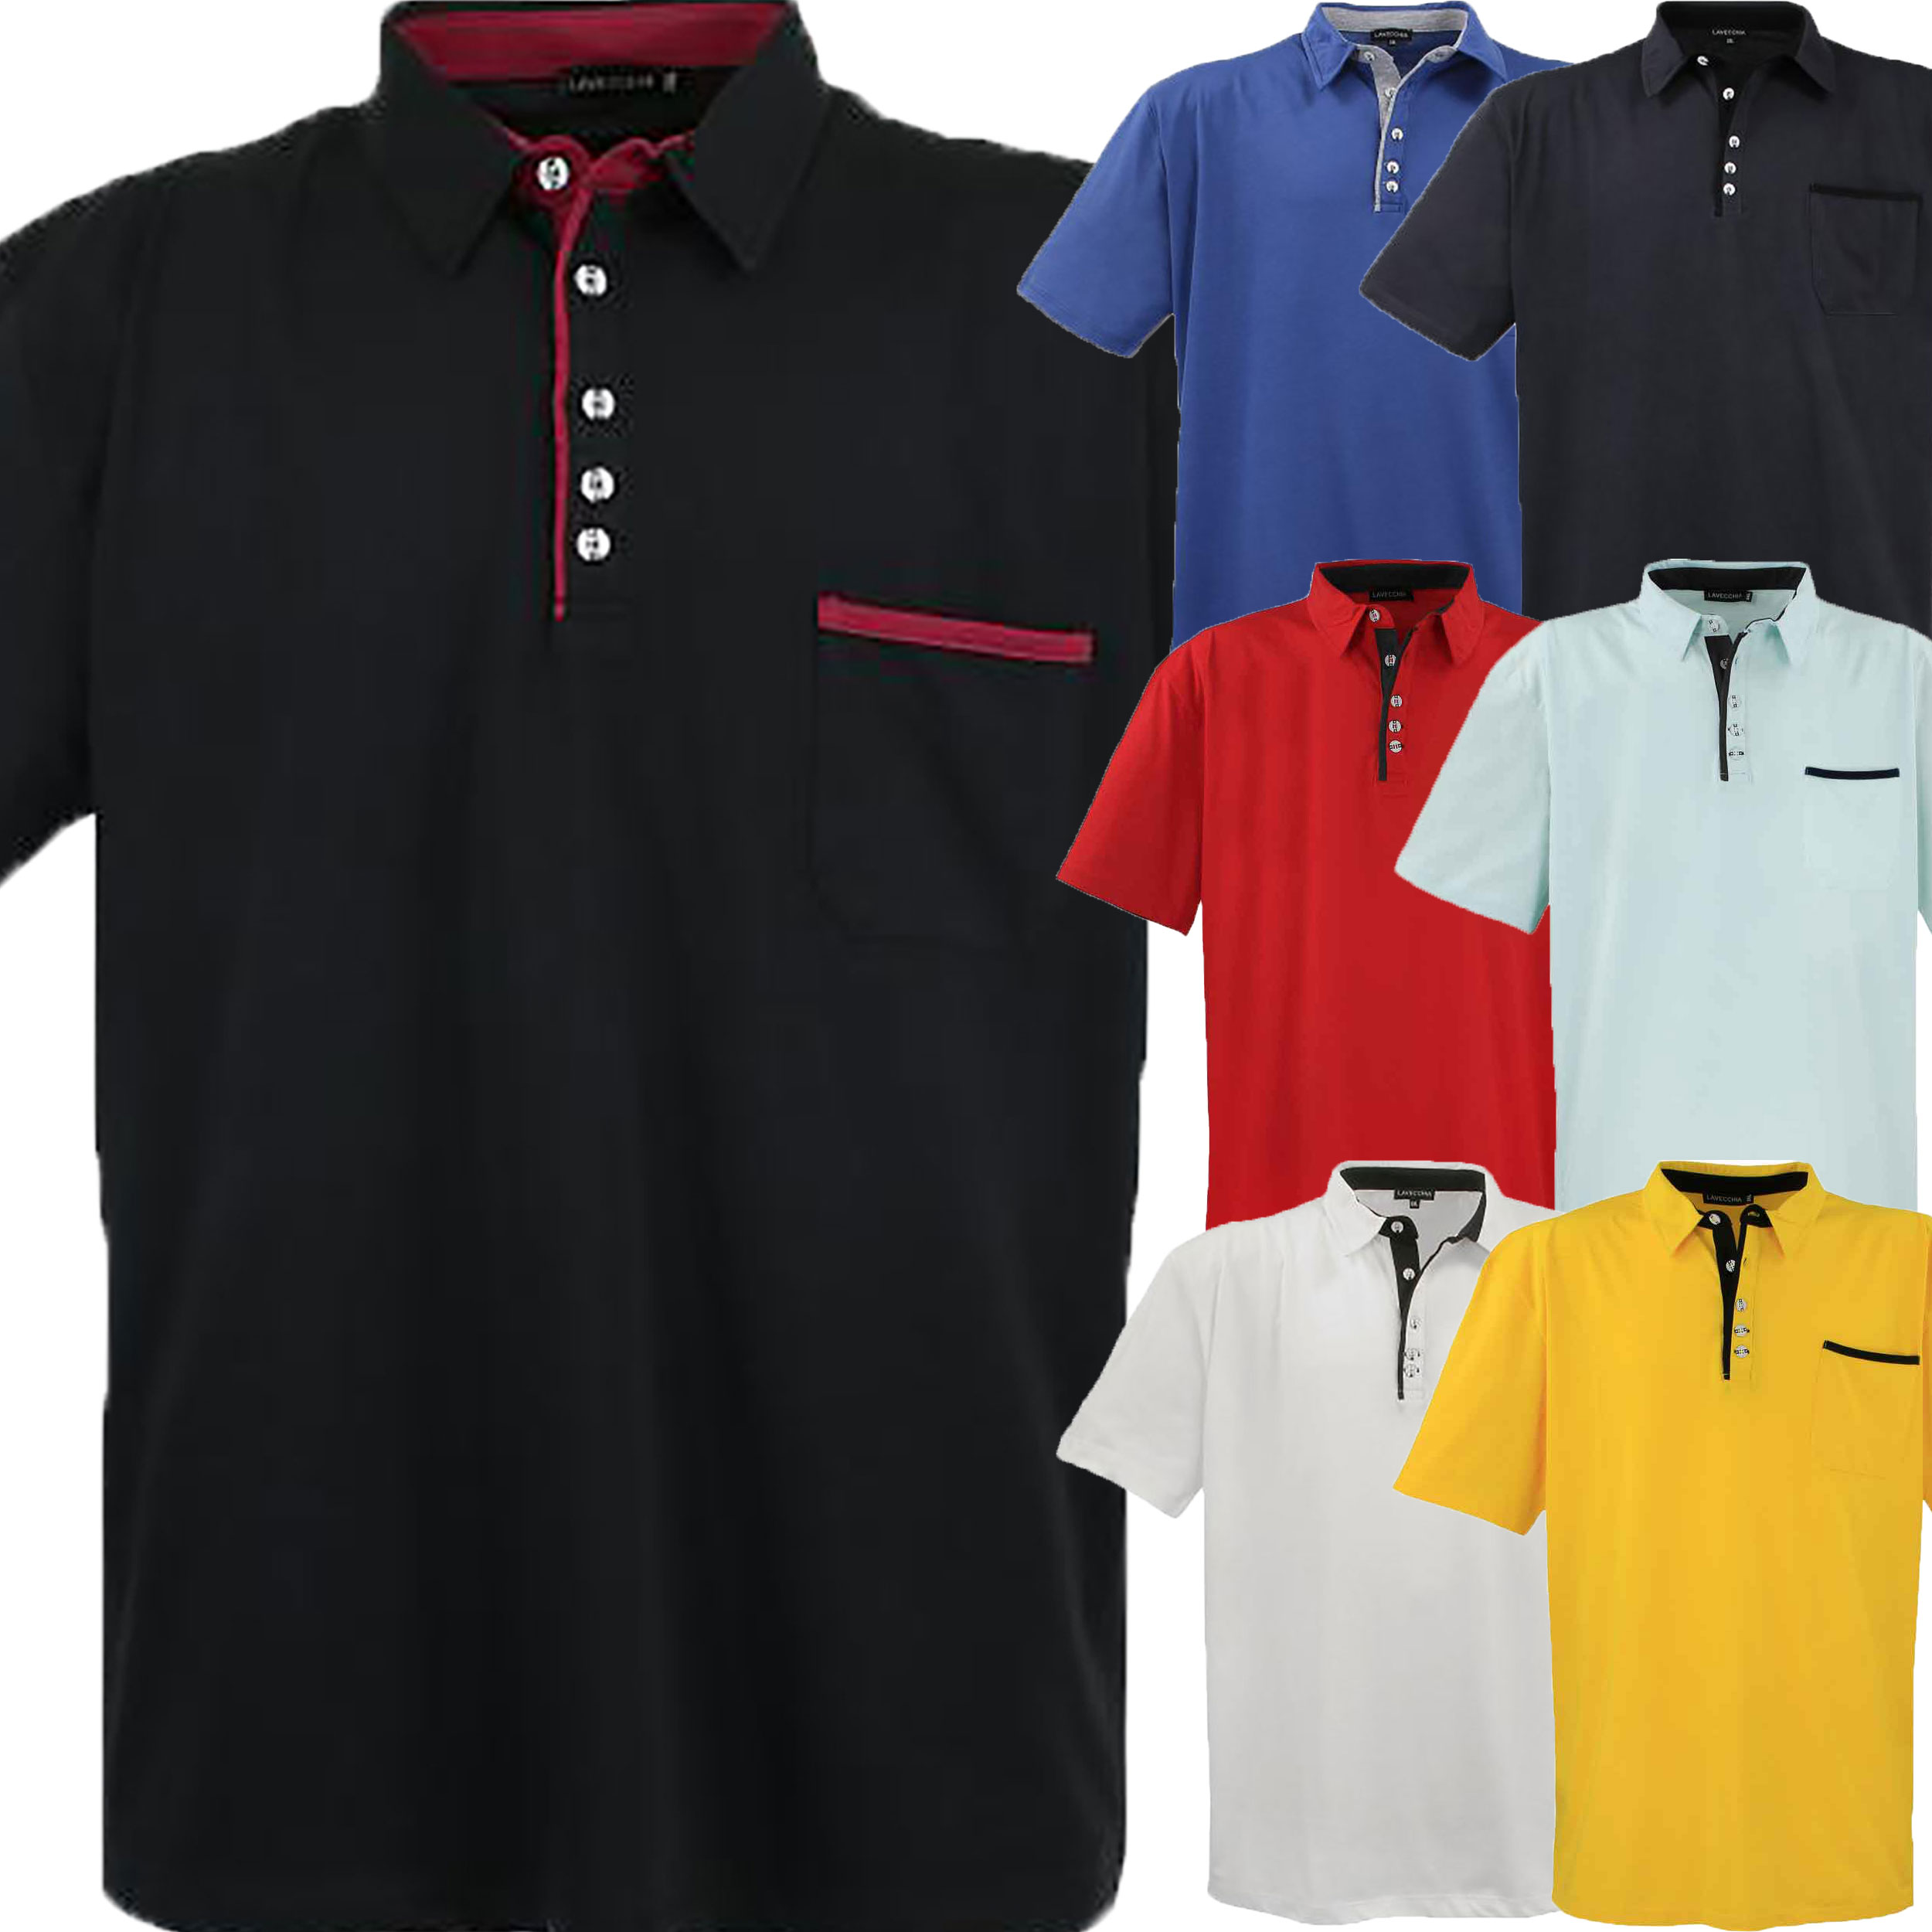 Alca Poloshirt für Männer mit Übergröße Bauchumfang 2XL-8XL Kurzarm Herren Polo Shirt 